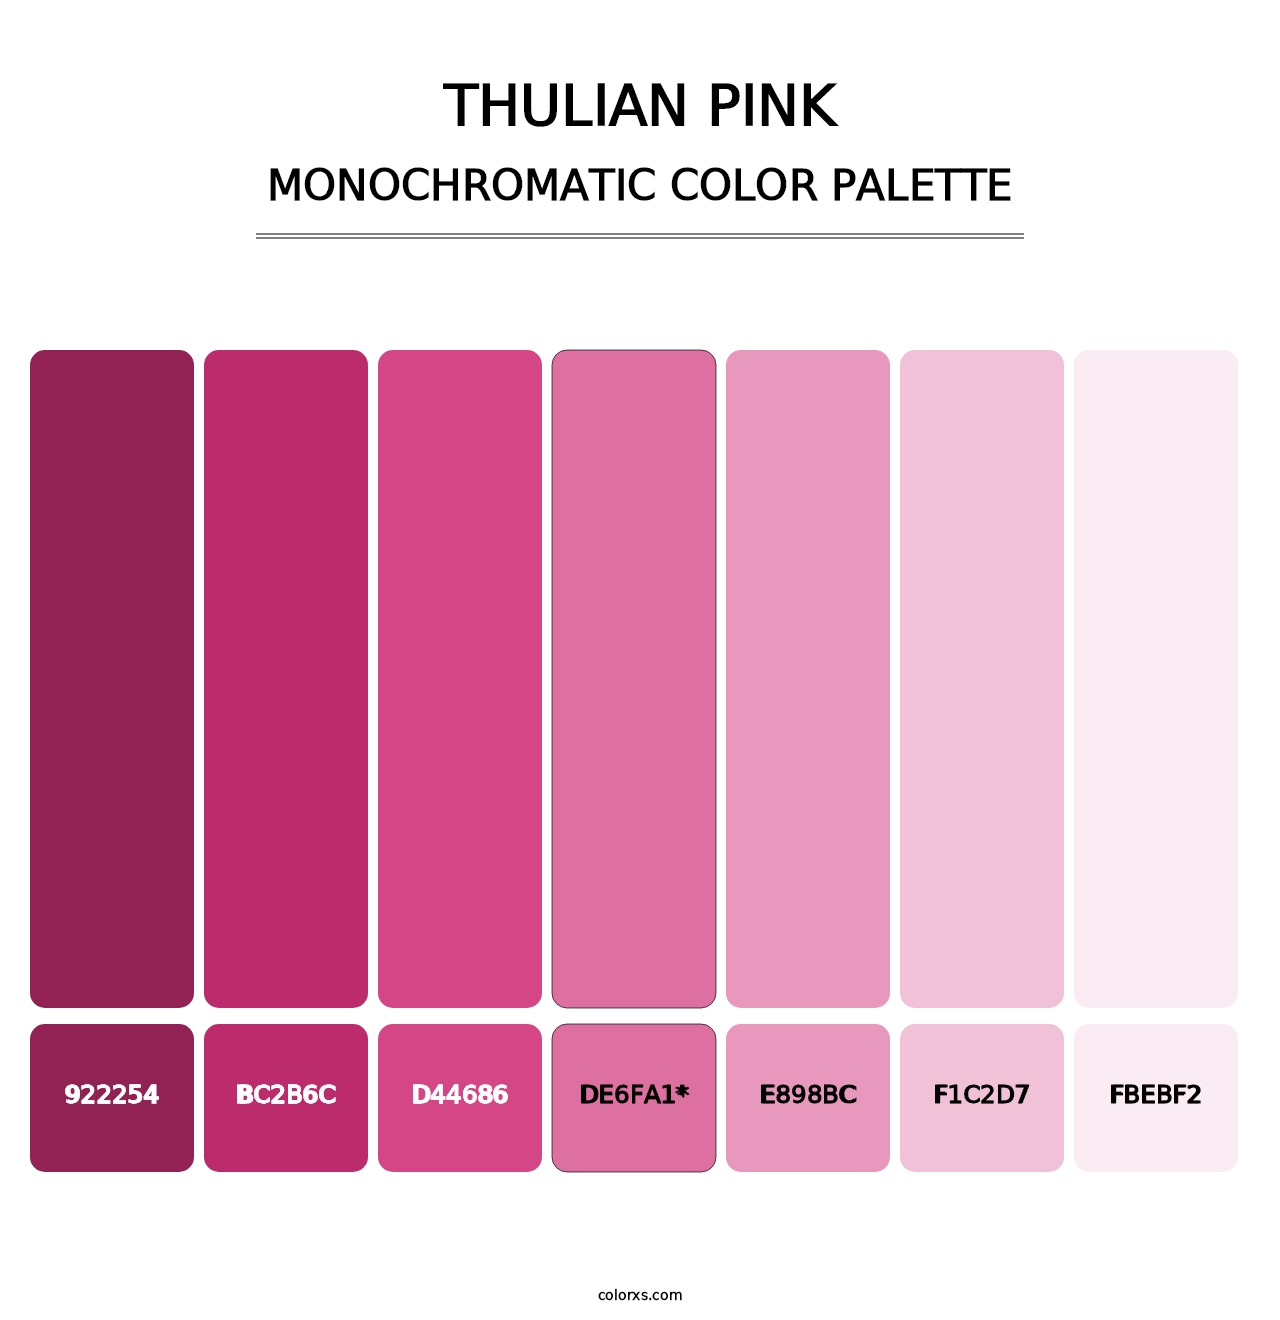 Thulian Pink - Monochromatic Color Palette